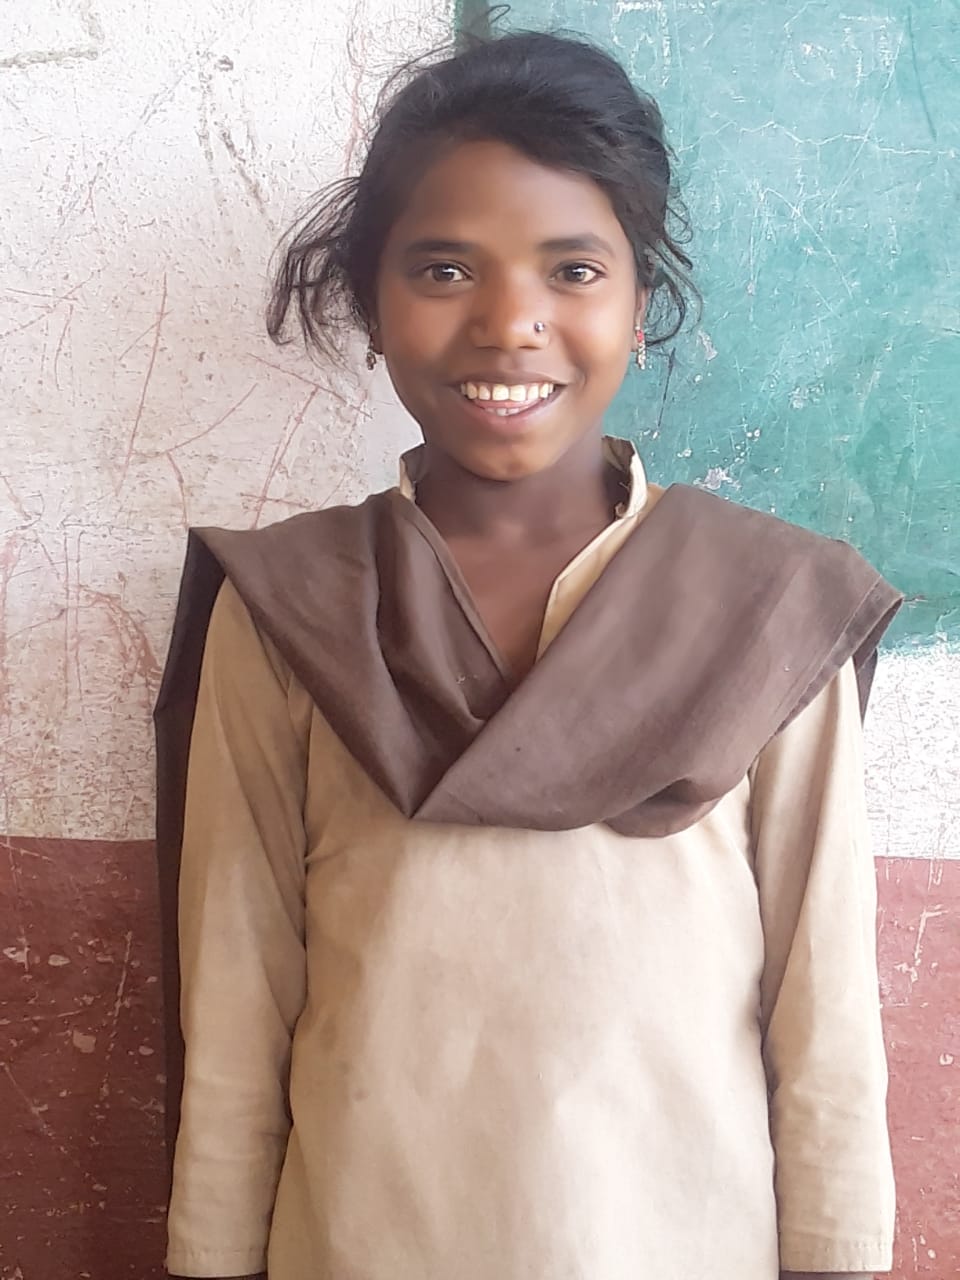 Gyan Ka Pitara (gkp) Helps Little Sheela Catch Up With Her Studies